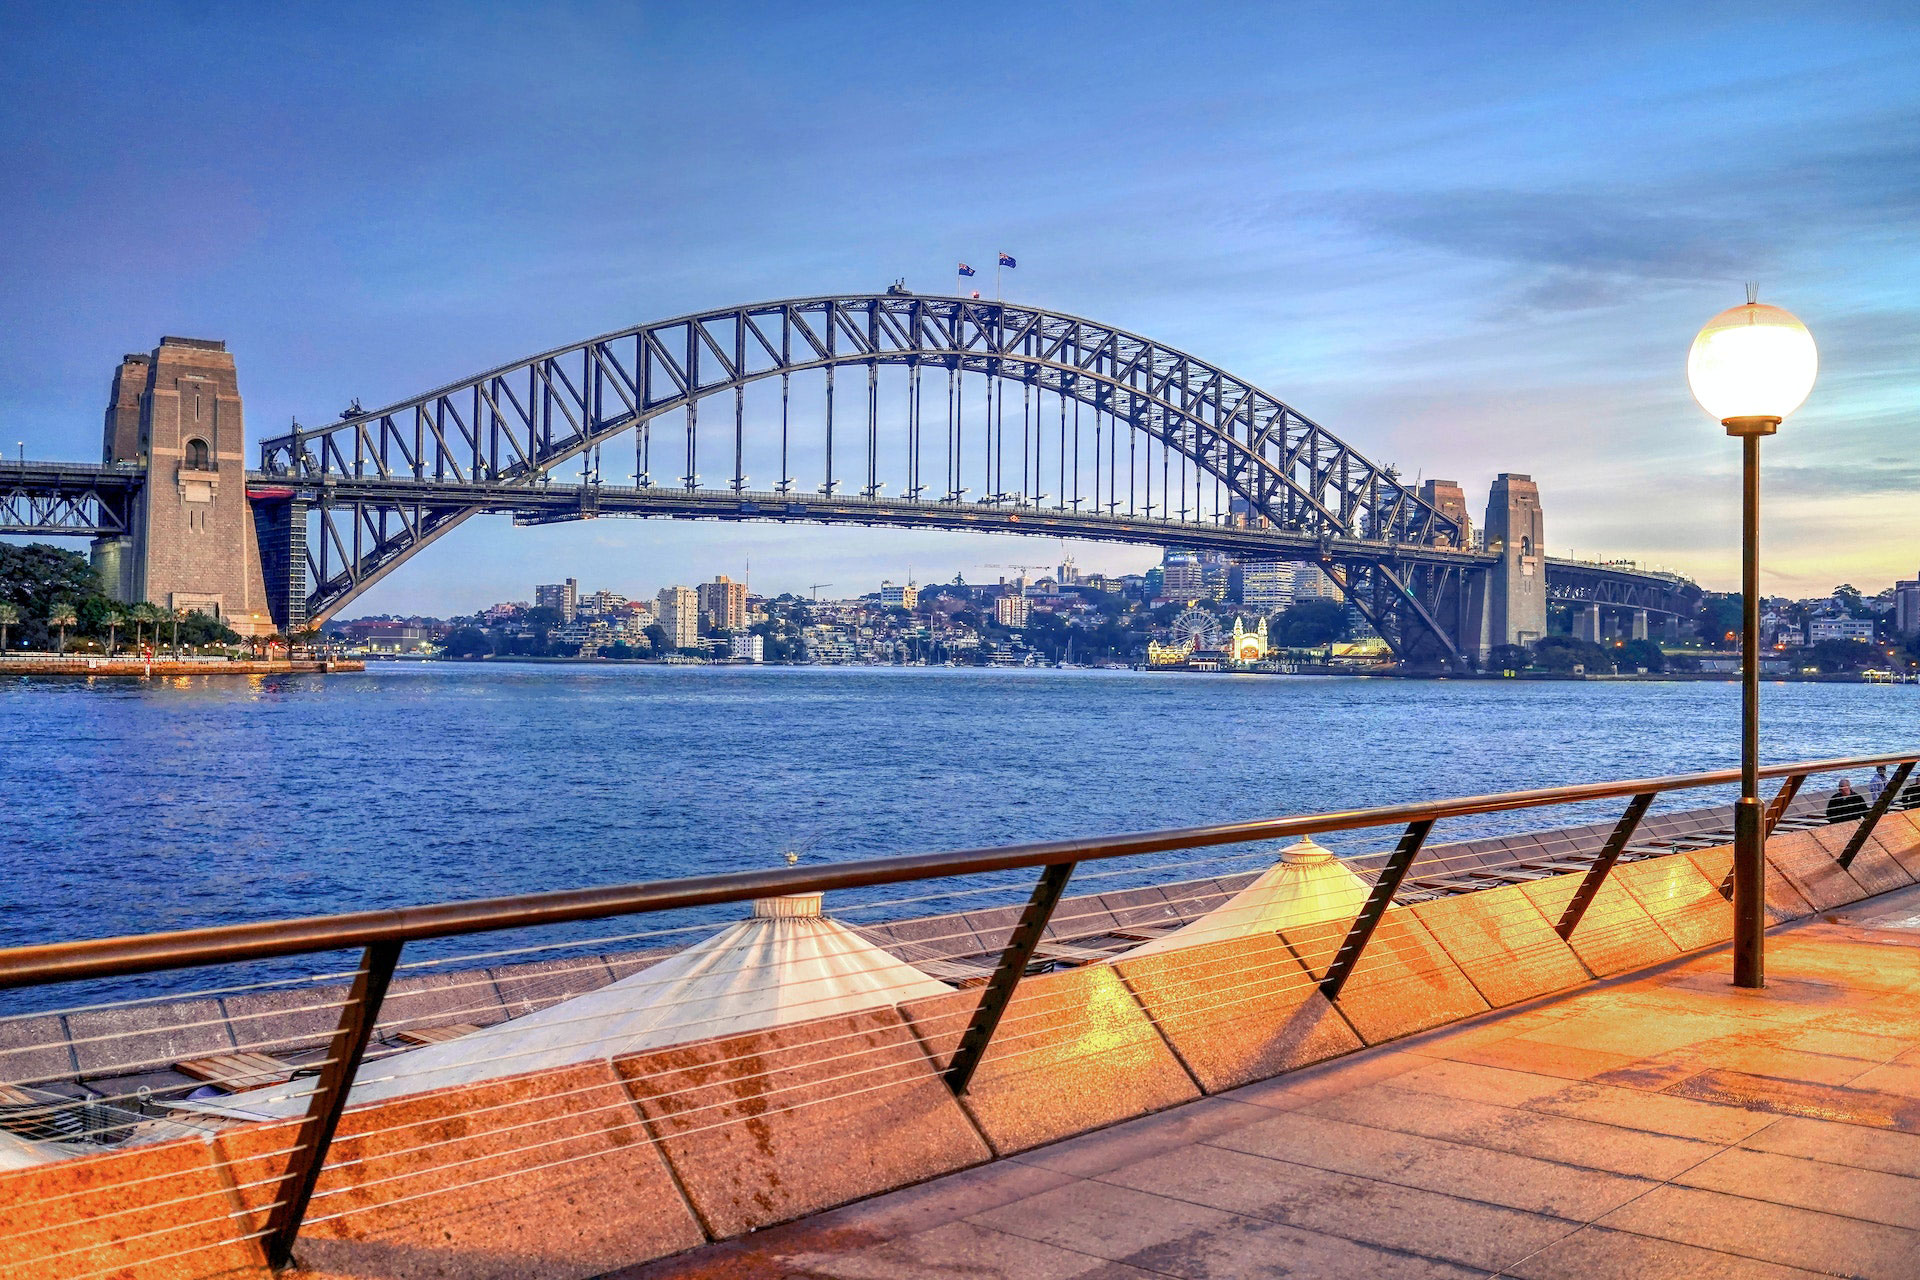 AlSydney Harbour Bridge above. Sydney Opera House - main photot